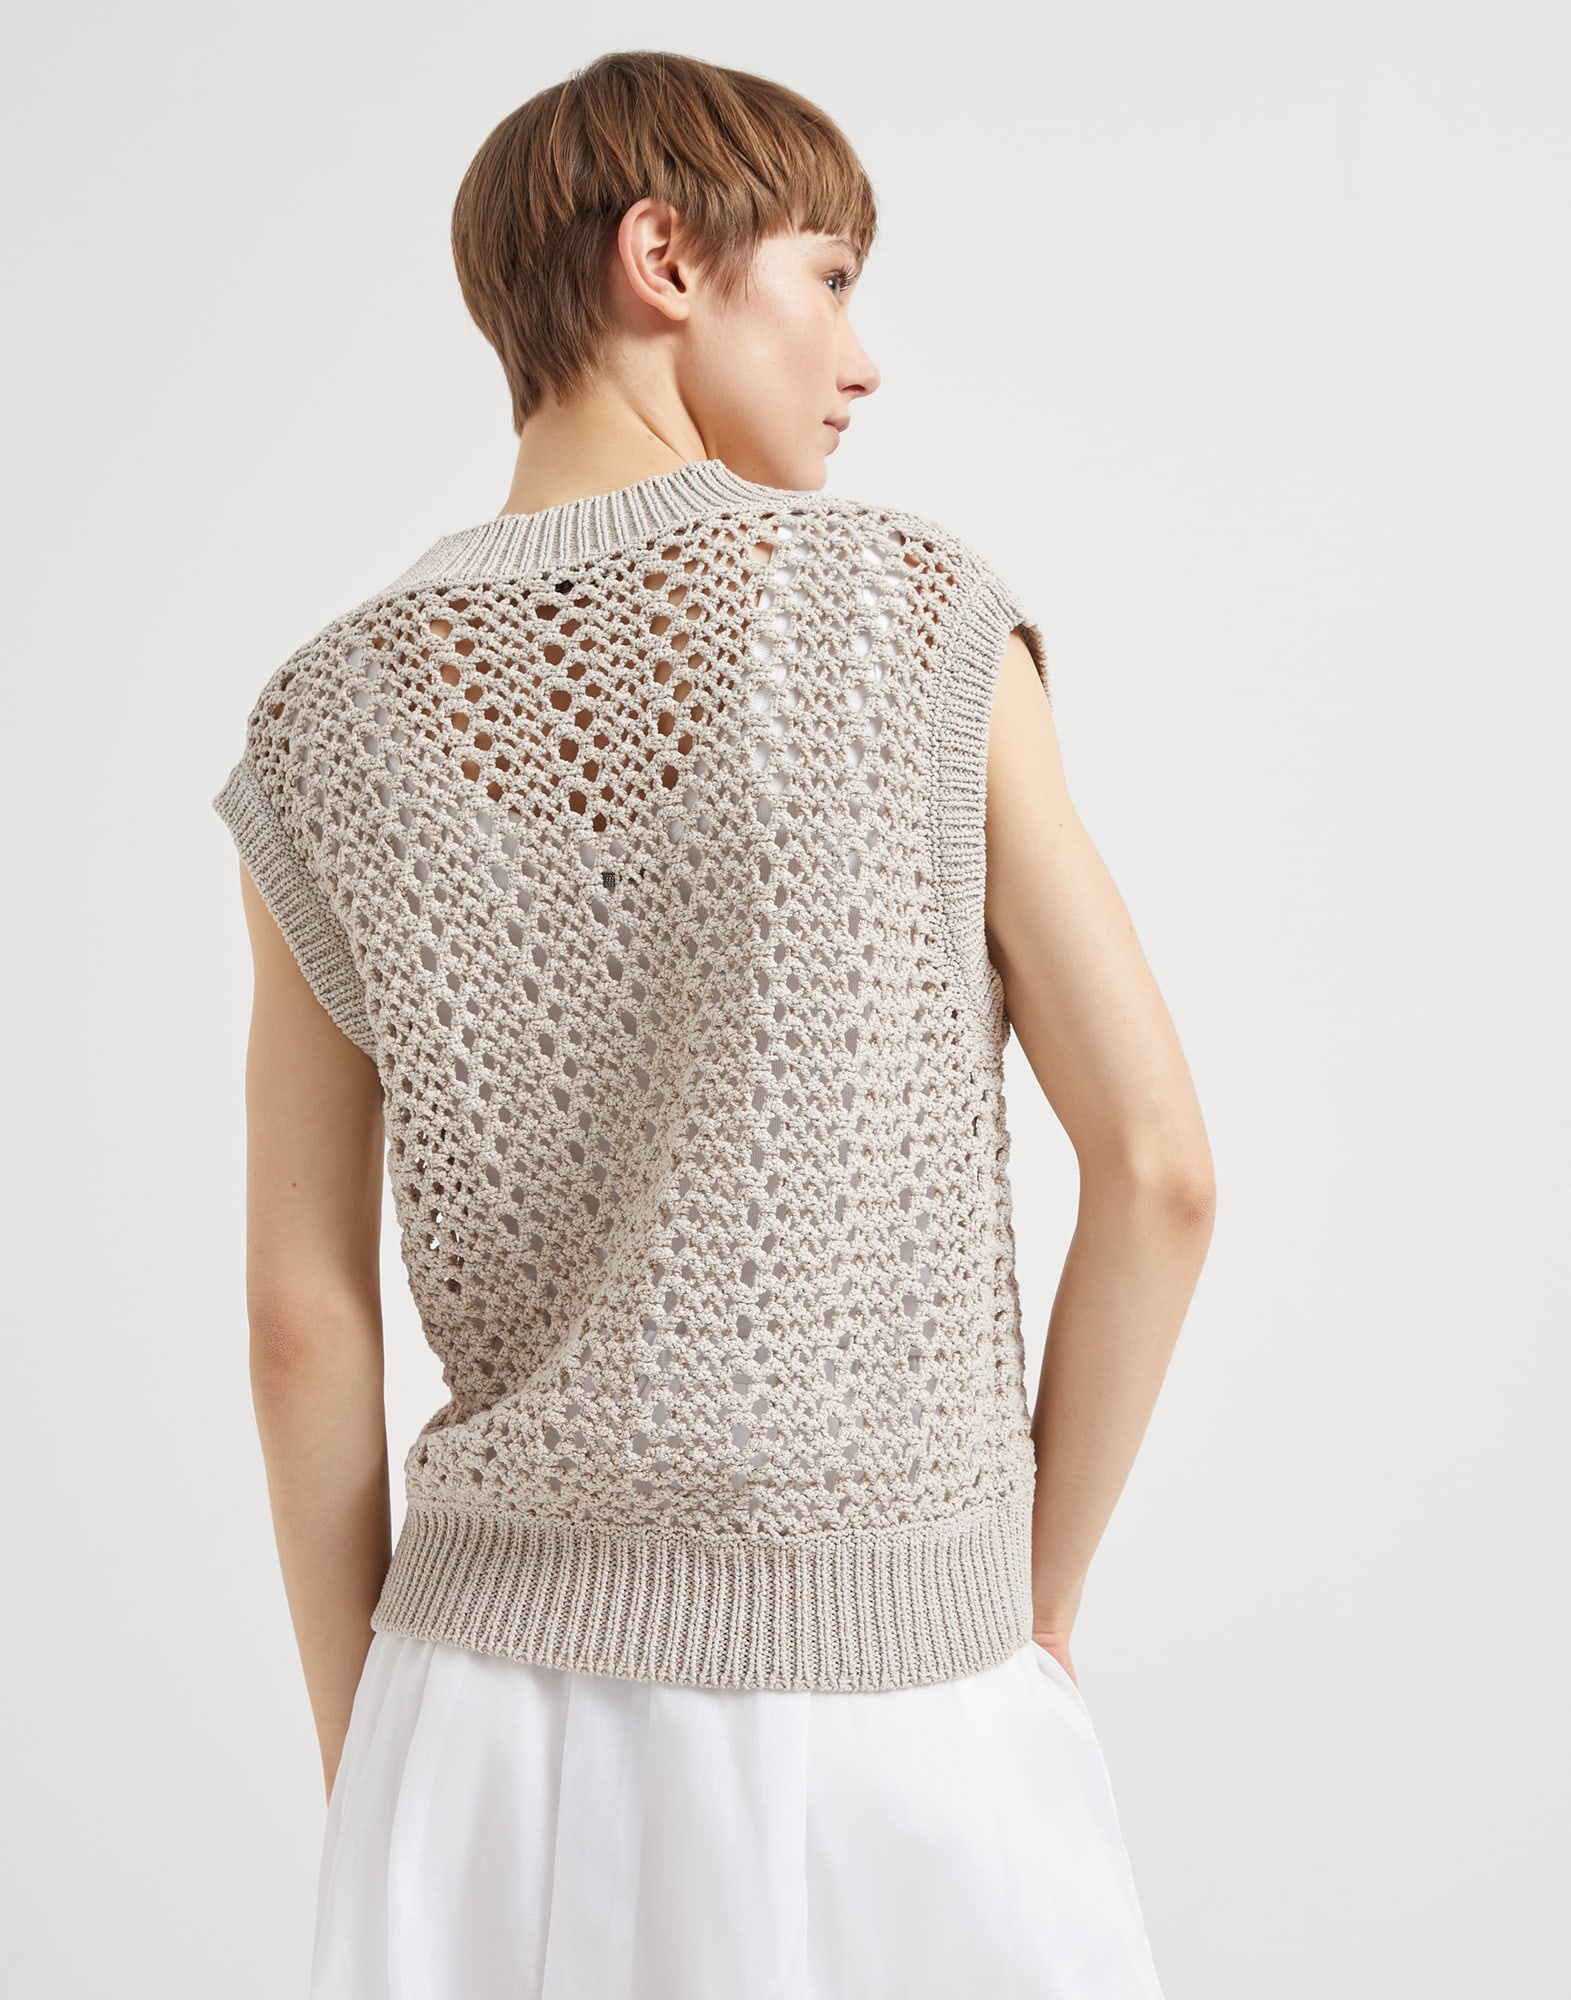 Techno cotton mesh knit top - 2